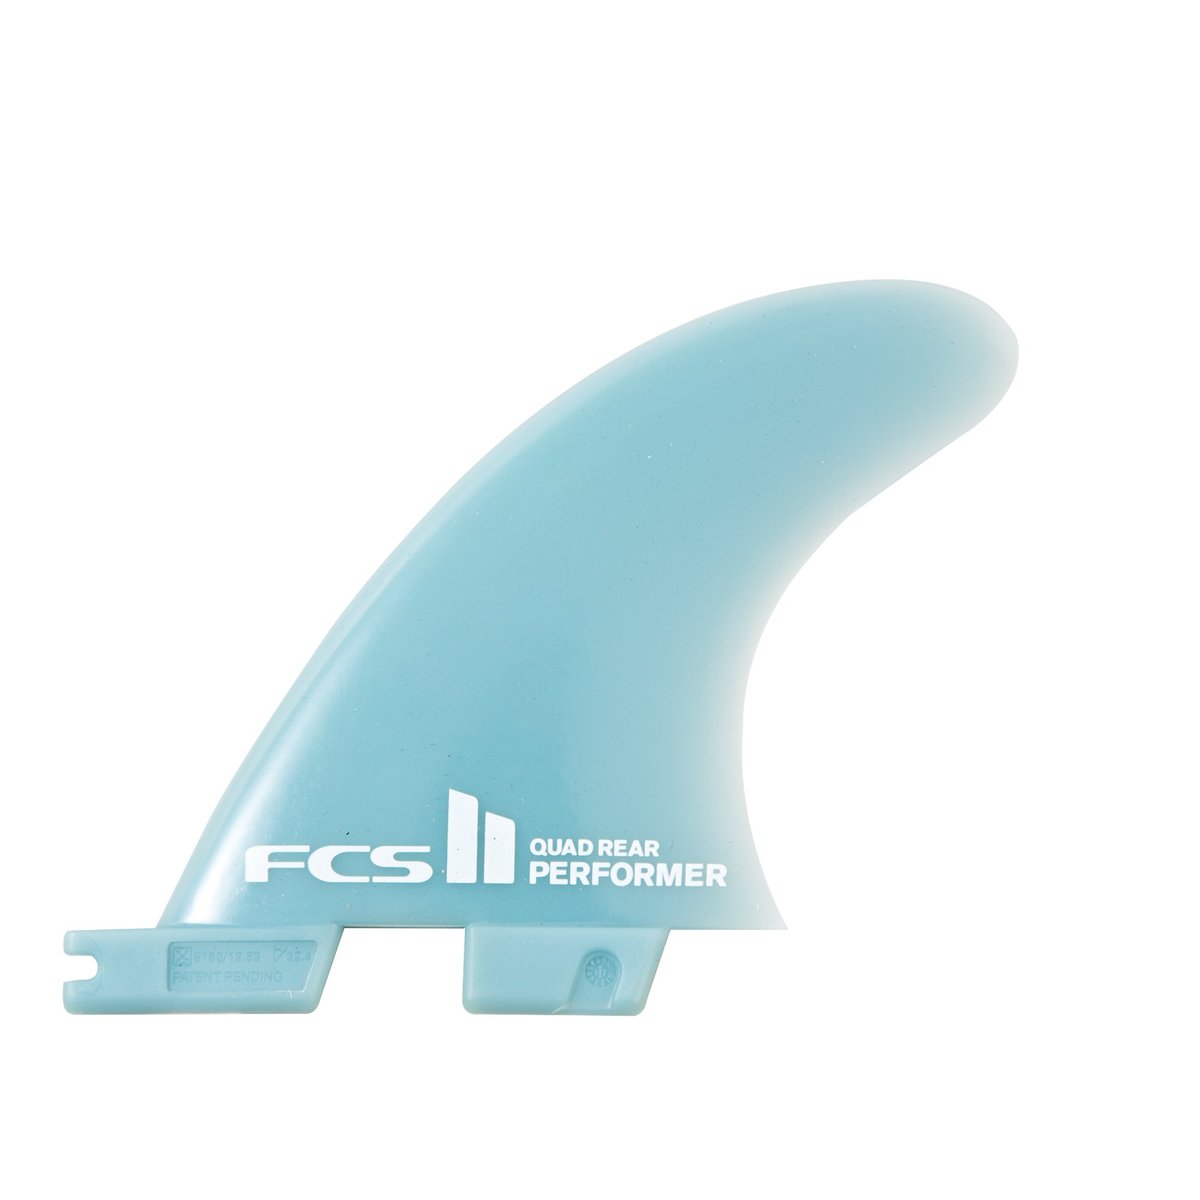 FCS II PEFORMER GLASS FLEX QUAD REAR - Star Surf + Skate